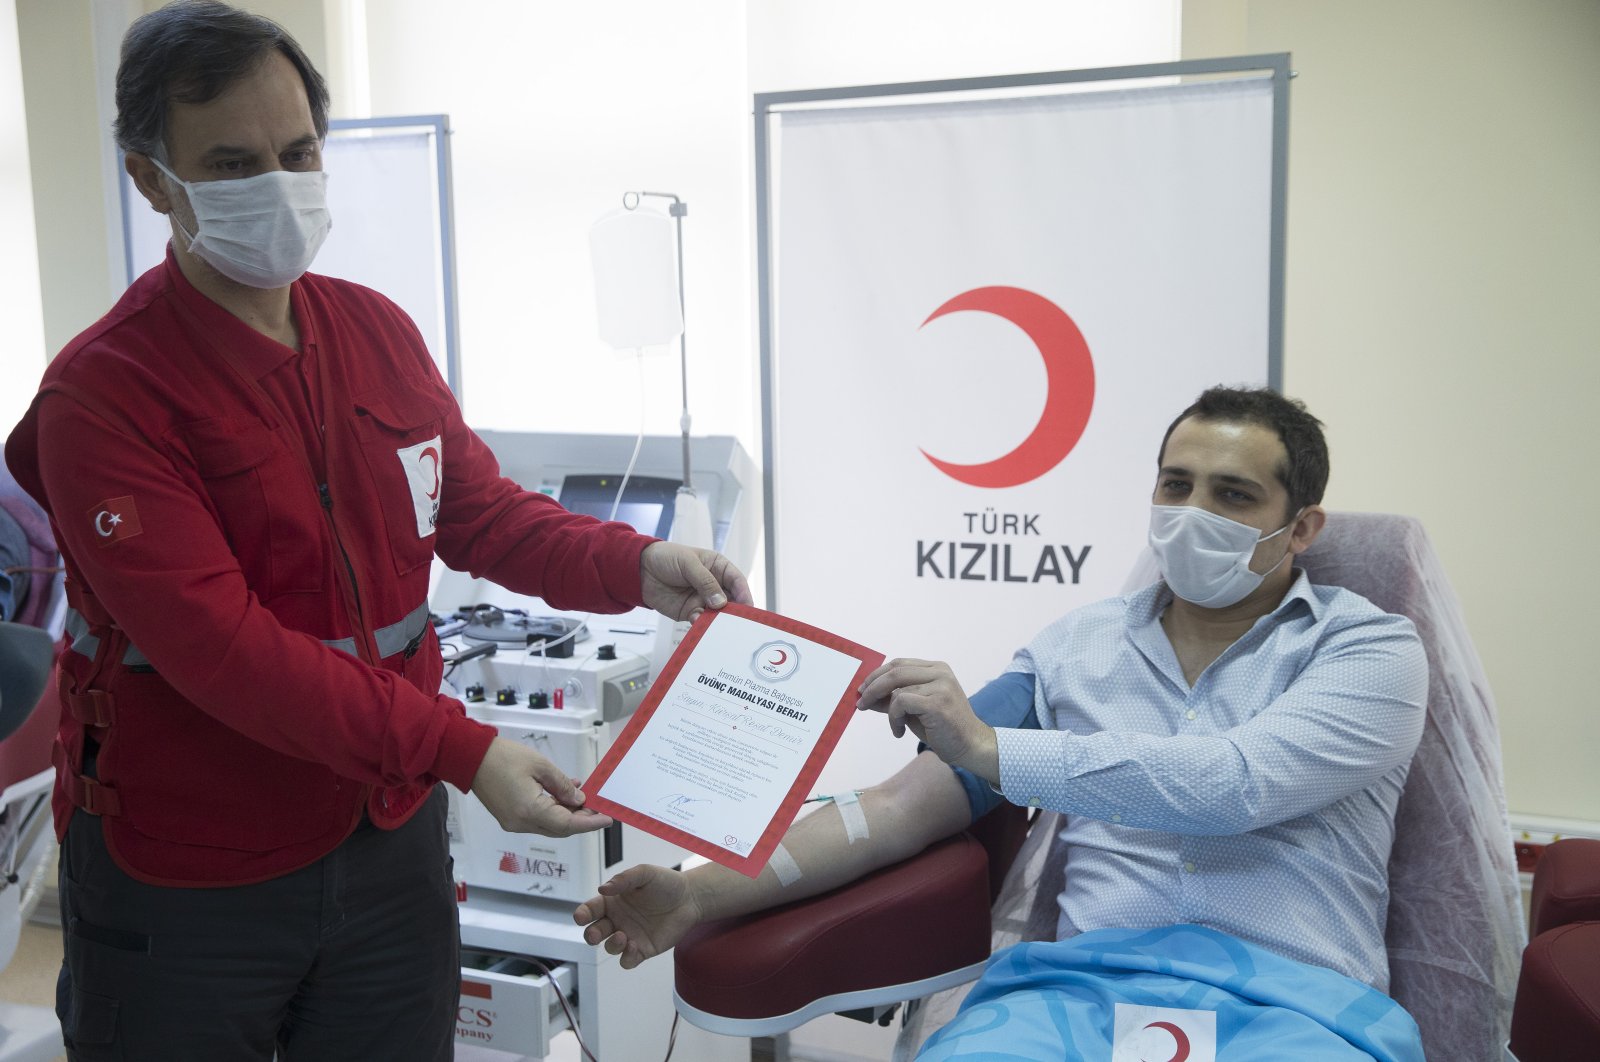 Dr. Kürşat Reşat Demir receives his medal from İbrahim Altan, general director of the Turkish Red Crescent, in Ankara, April 21, 2020. (AA Photo)